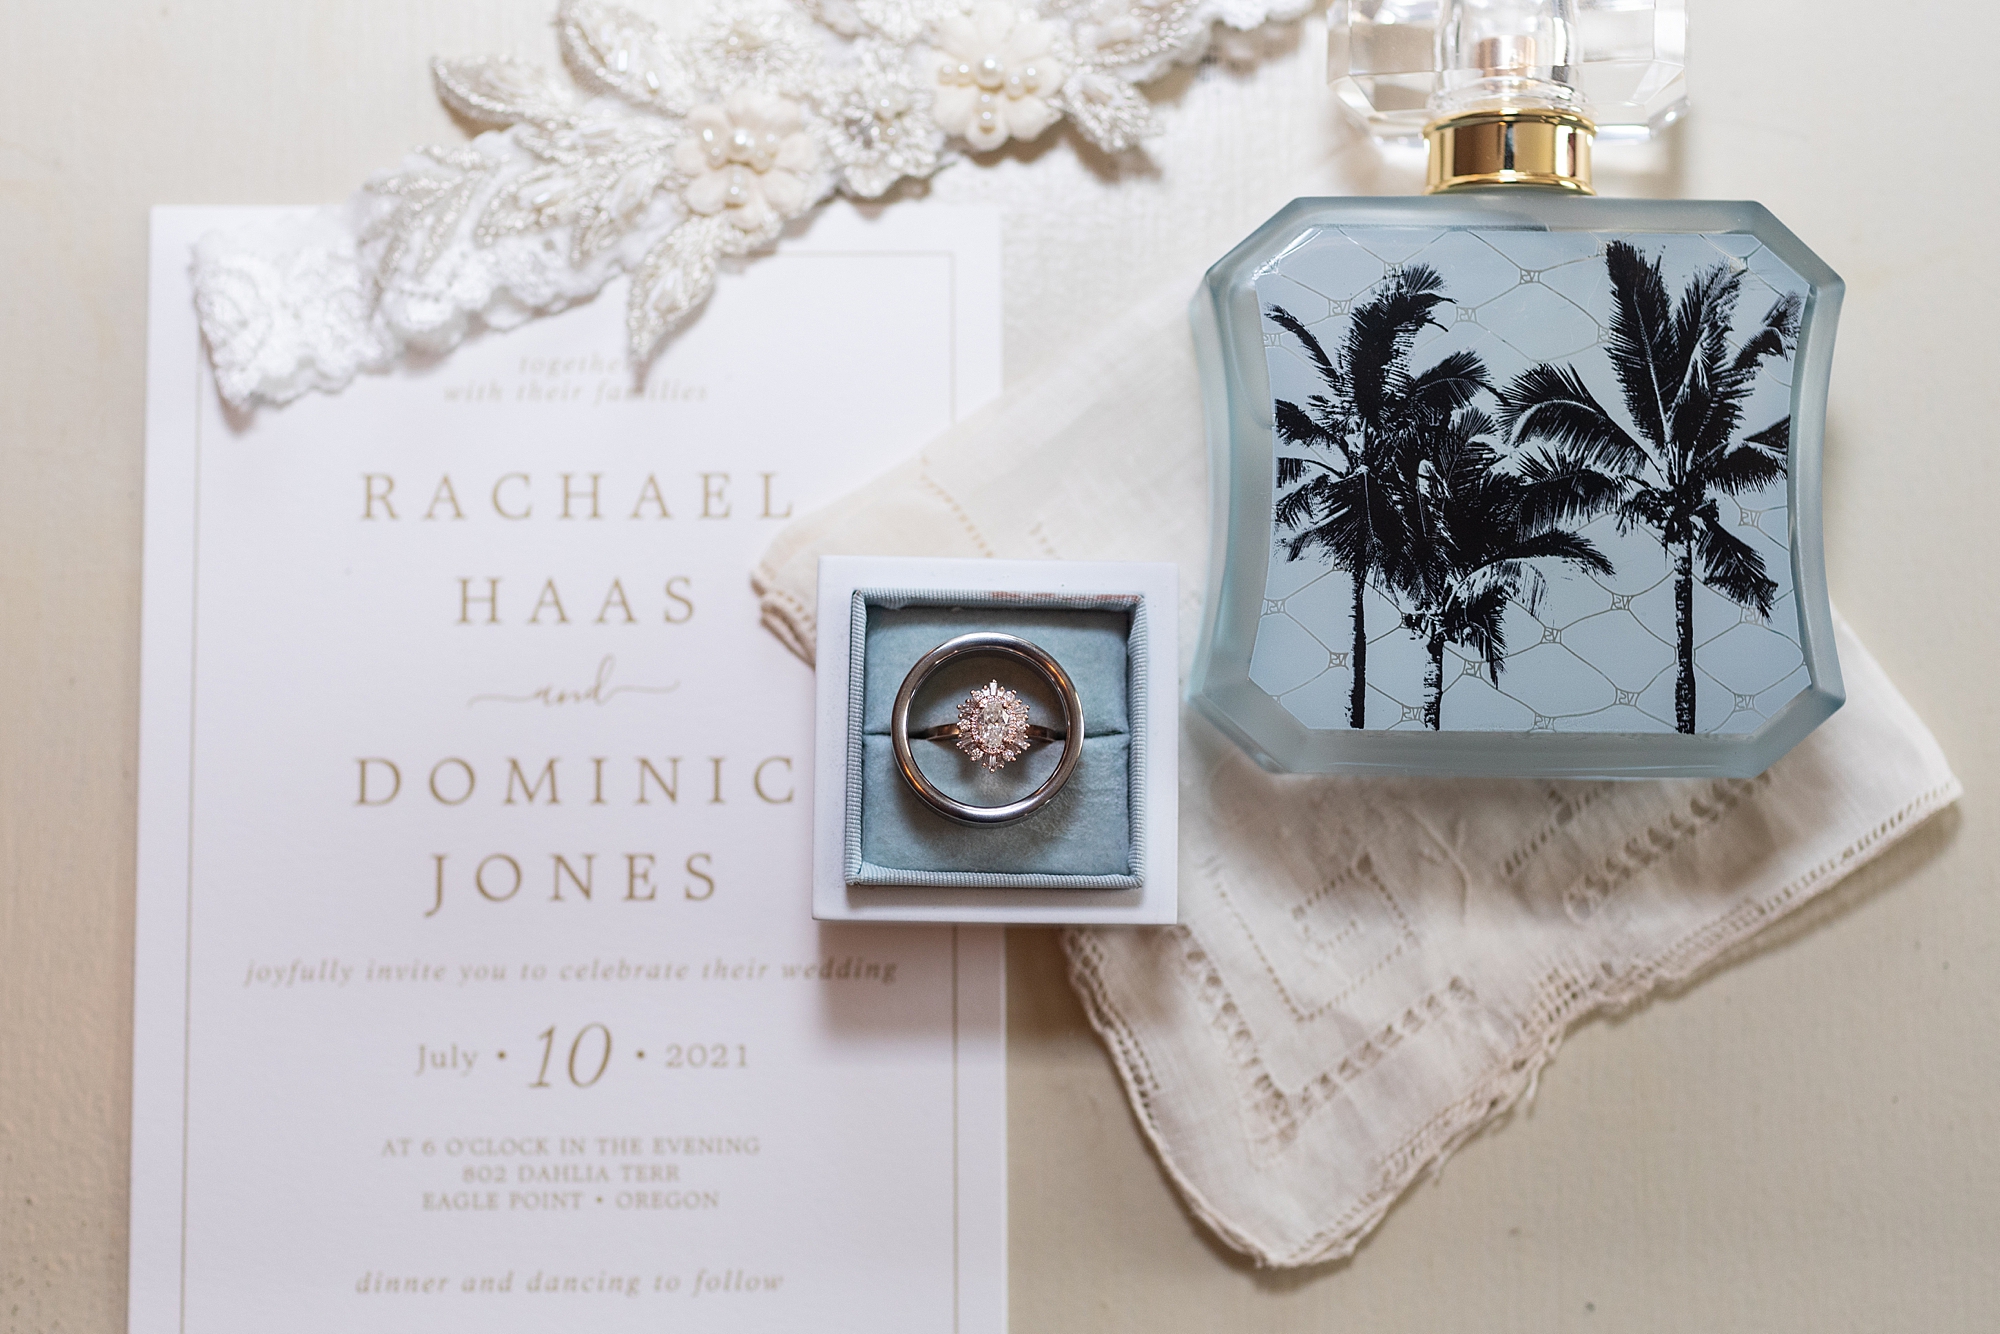 wedding rings, invitation and perfume